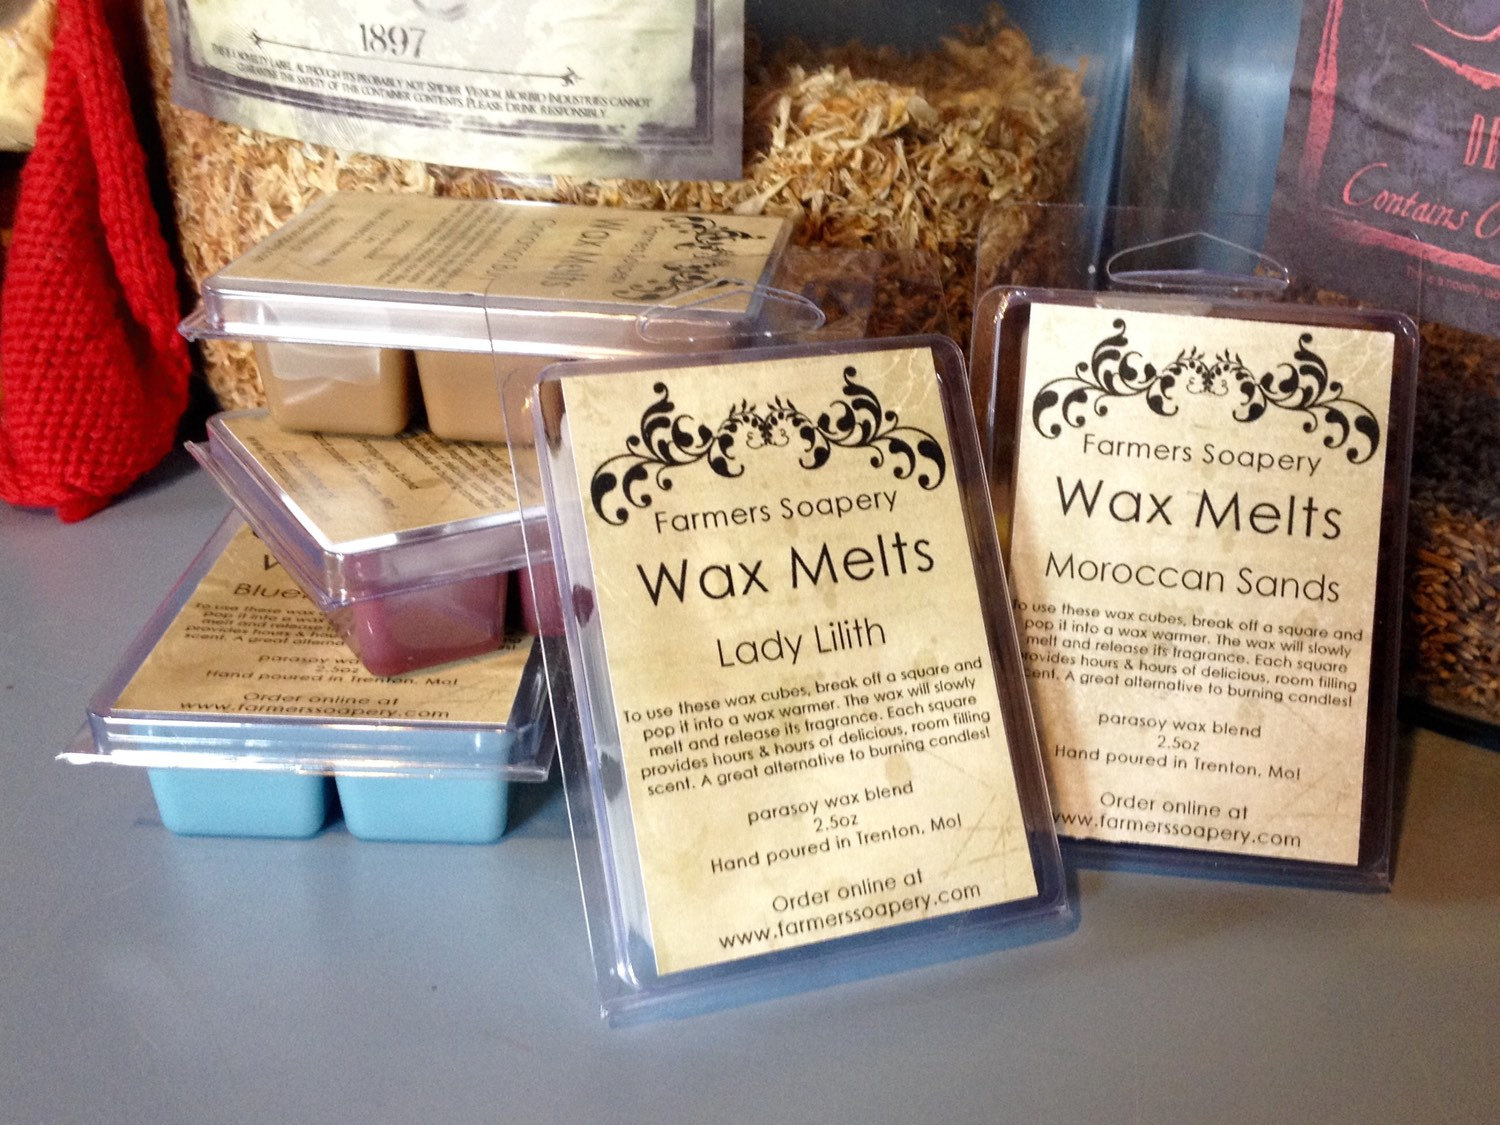 Wax Melts Wax Cubes, Scented Wax Melts, Scented Wax Cubes, Soy Wax Cubes  for Warmers, Soy Wax Cubes Candle Melts, Wax Bar Melts 2.5 oz X 8 Pack